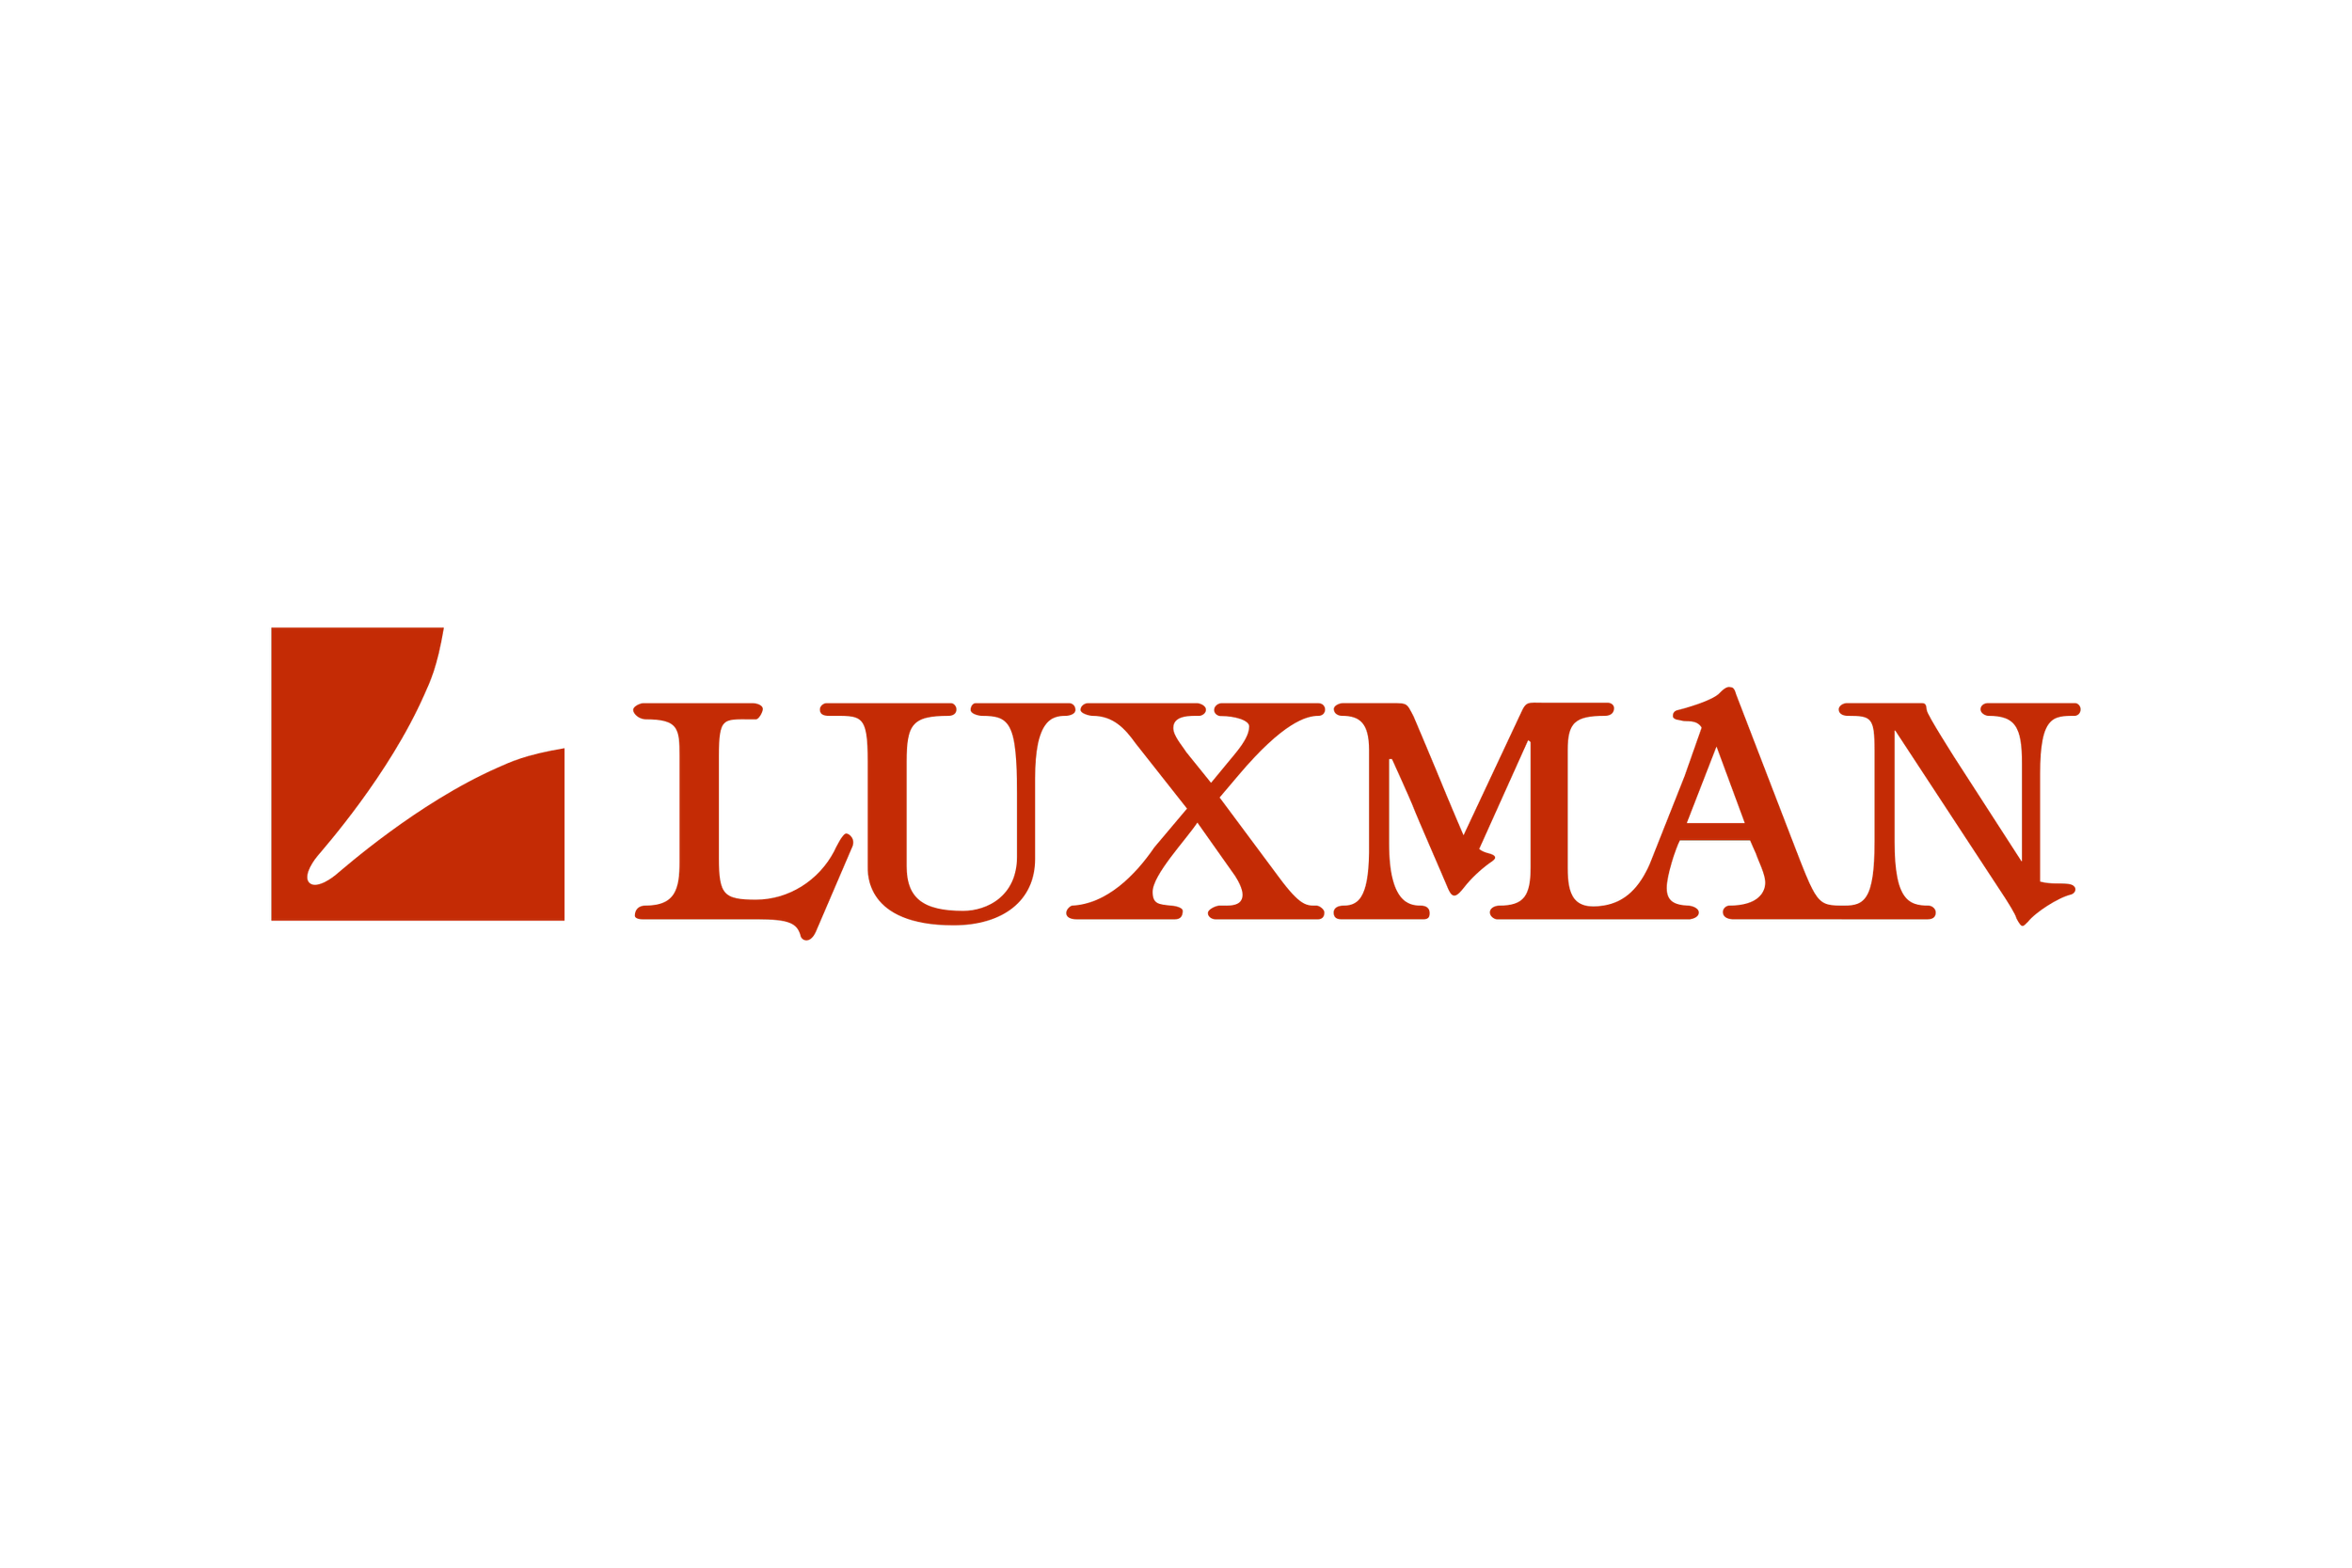 Luxman Logo